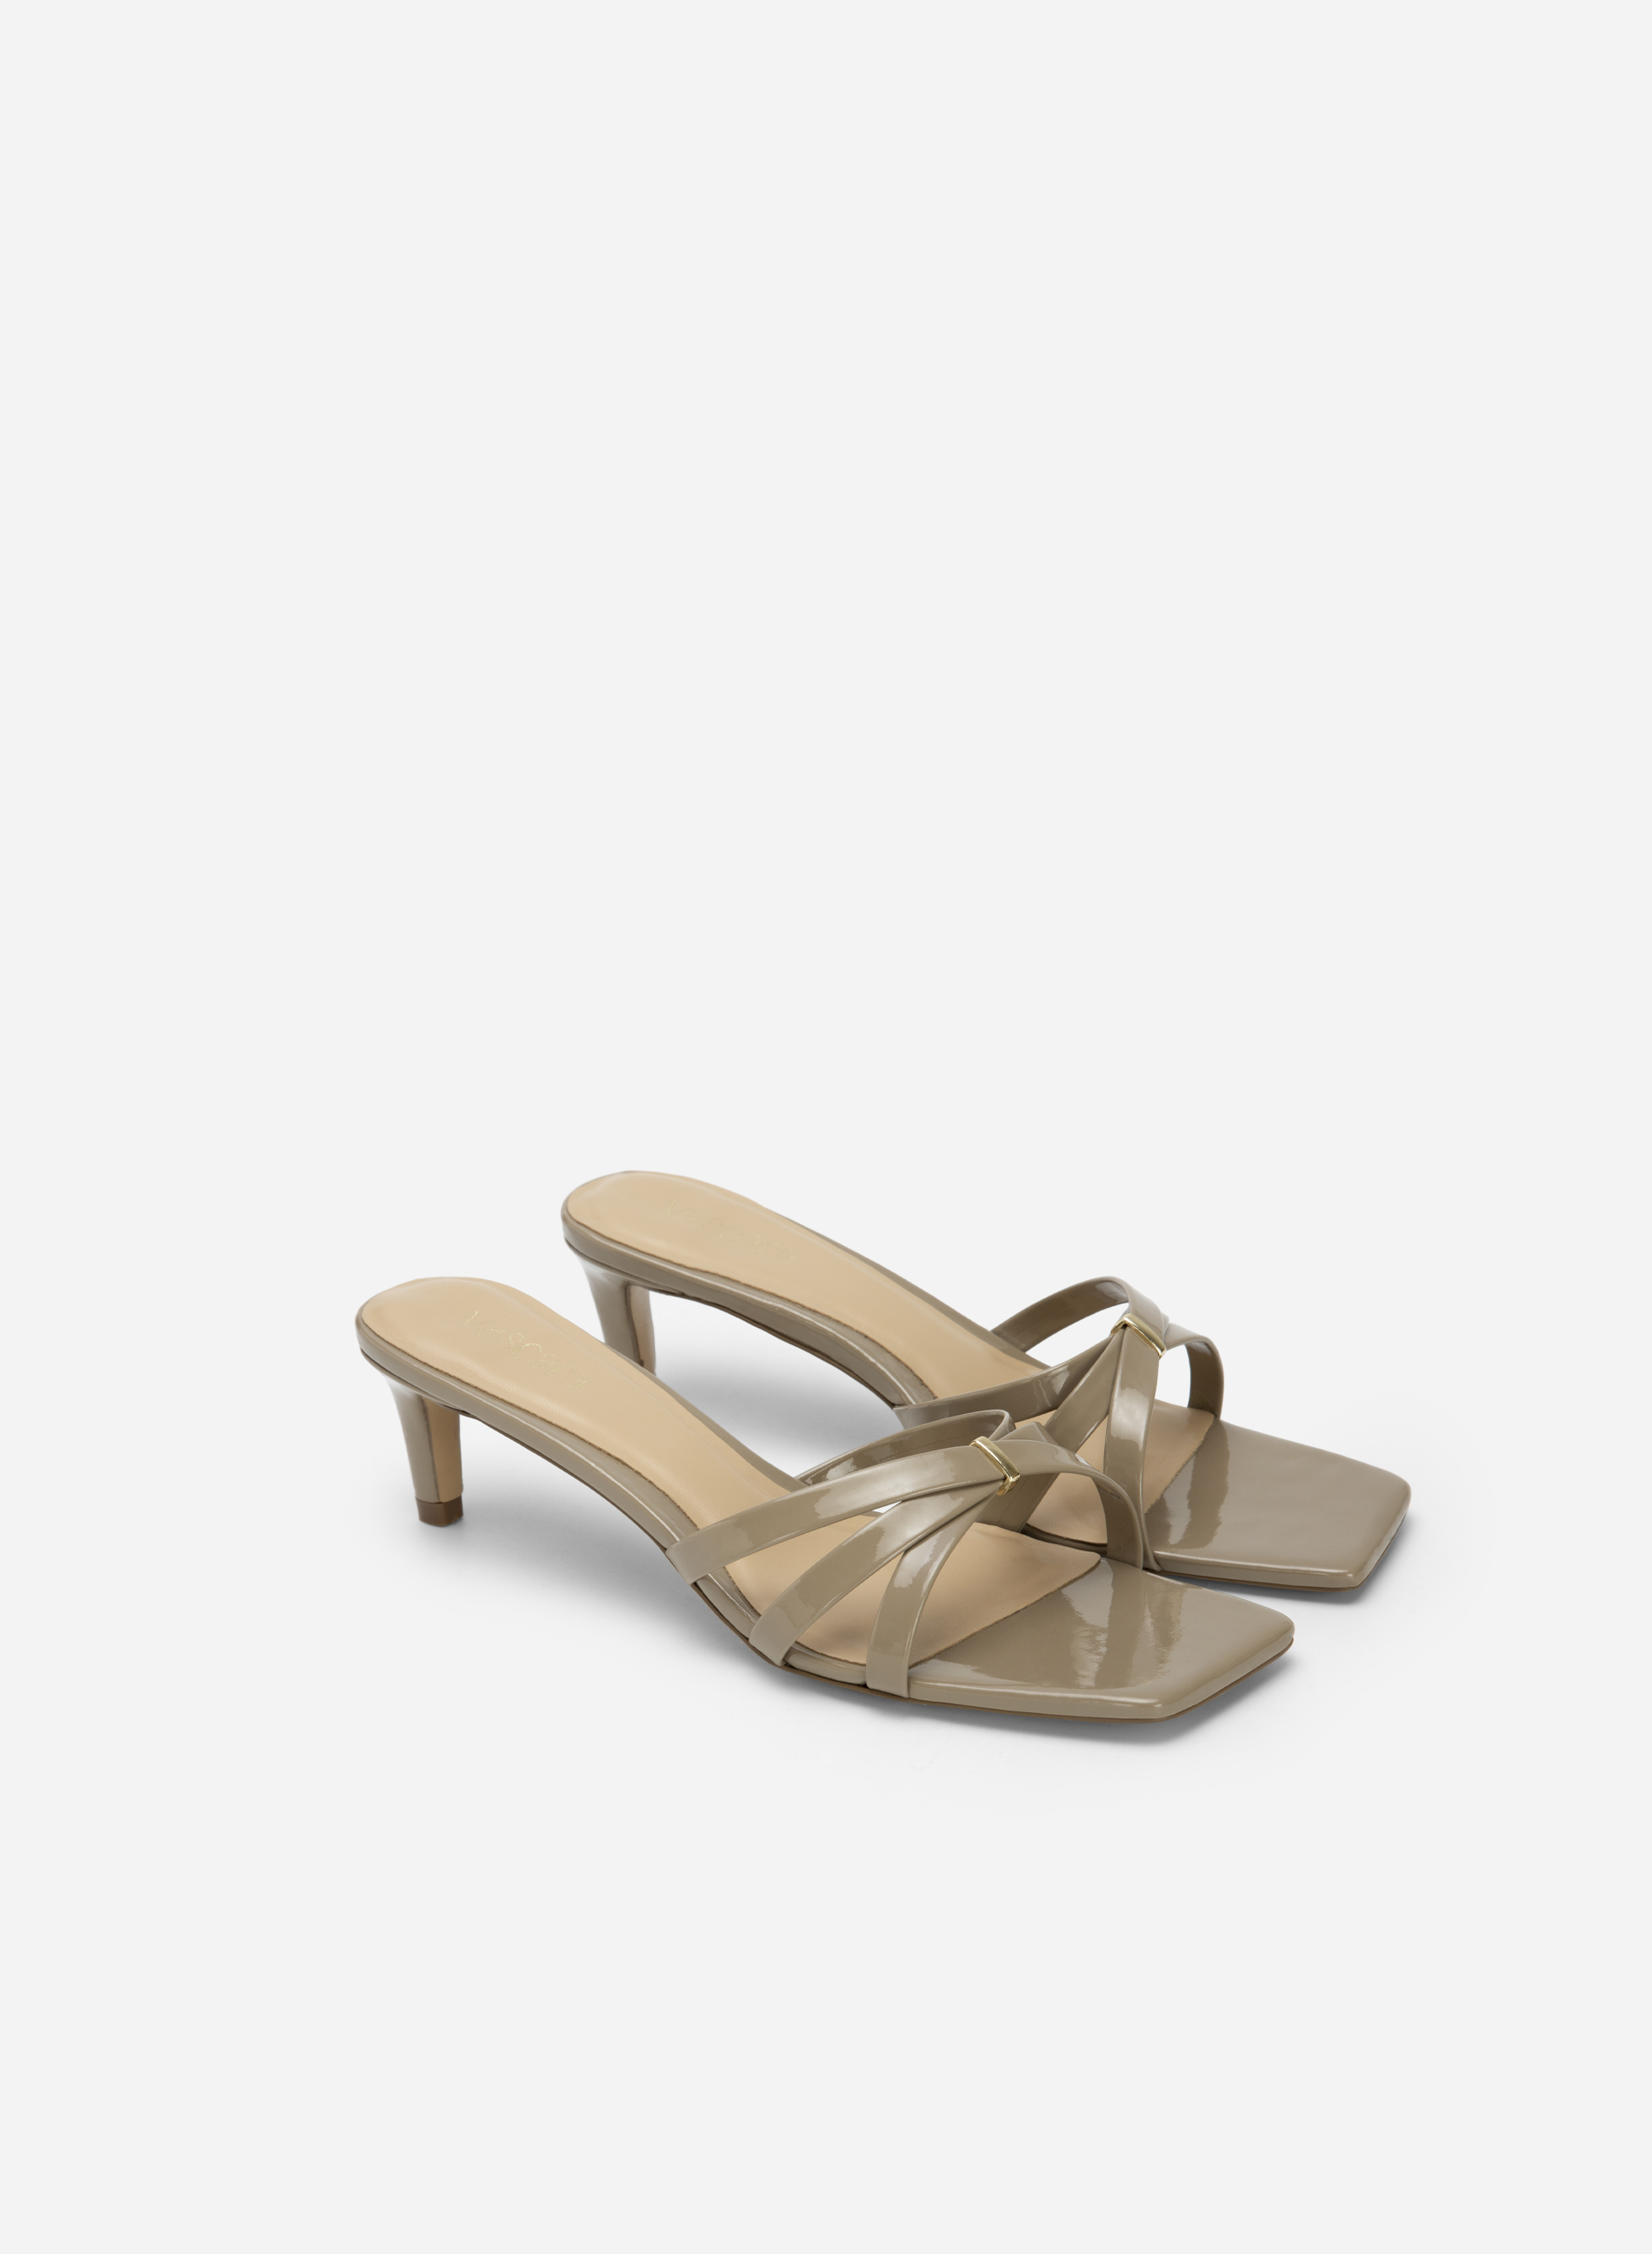 Cross Strap Cuban Heel Square Toe Mule Sandals - MUL 0165 - Olive